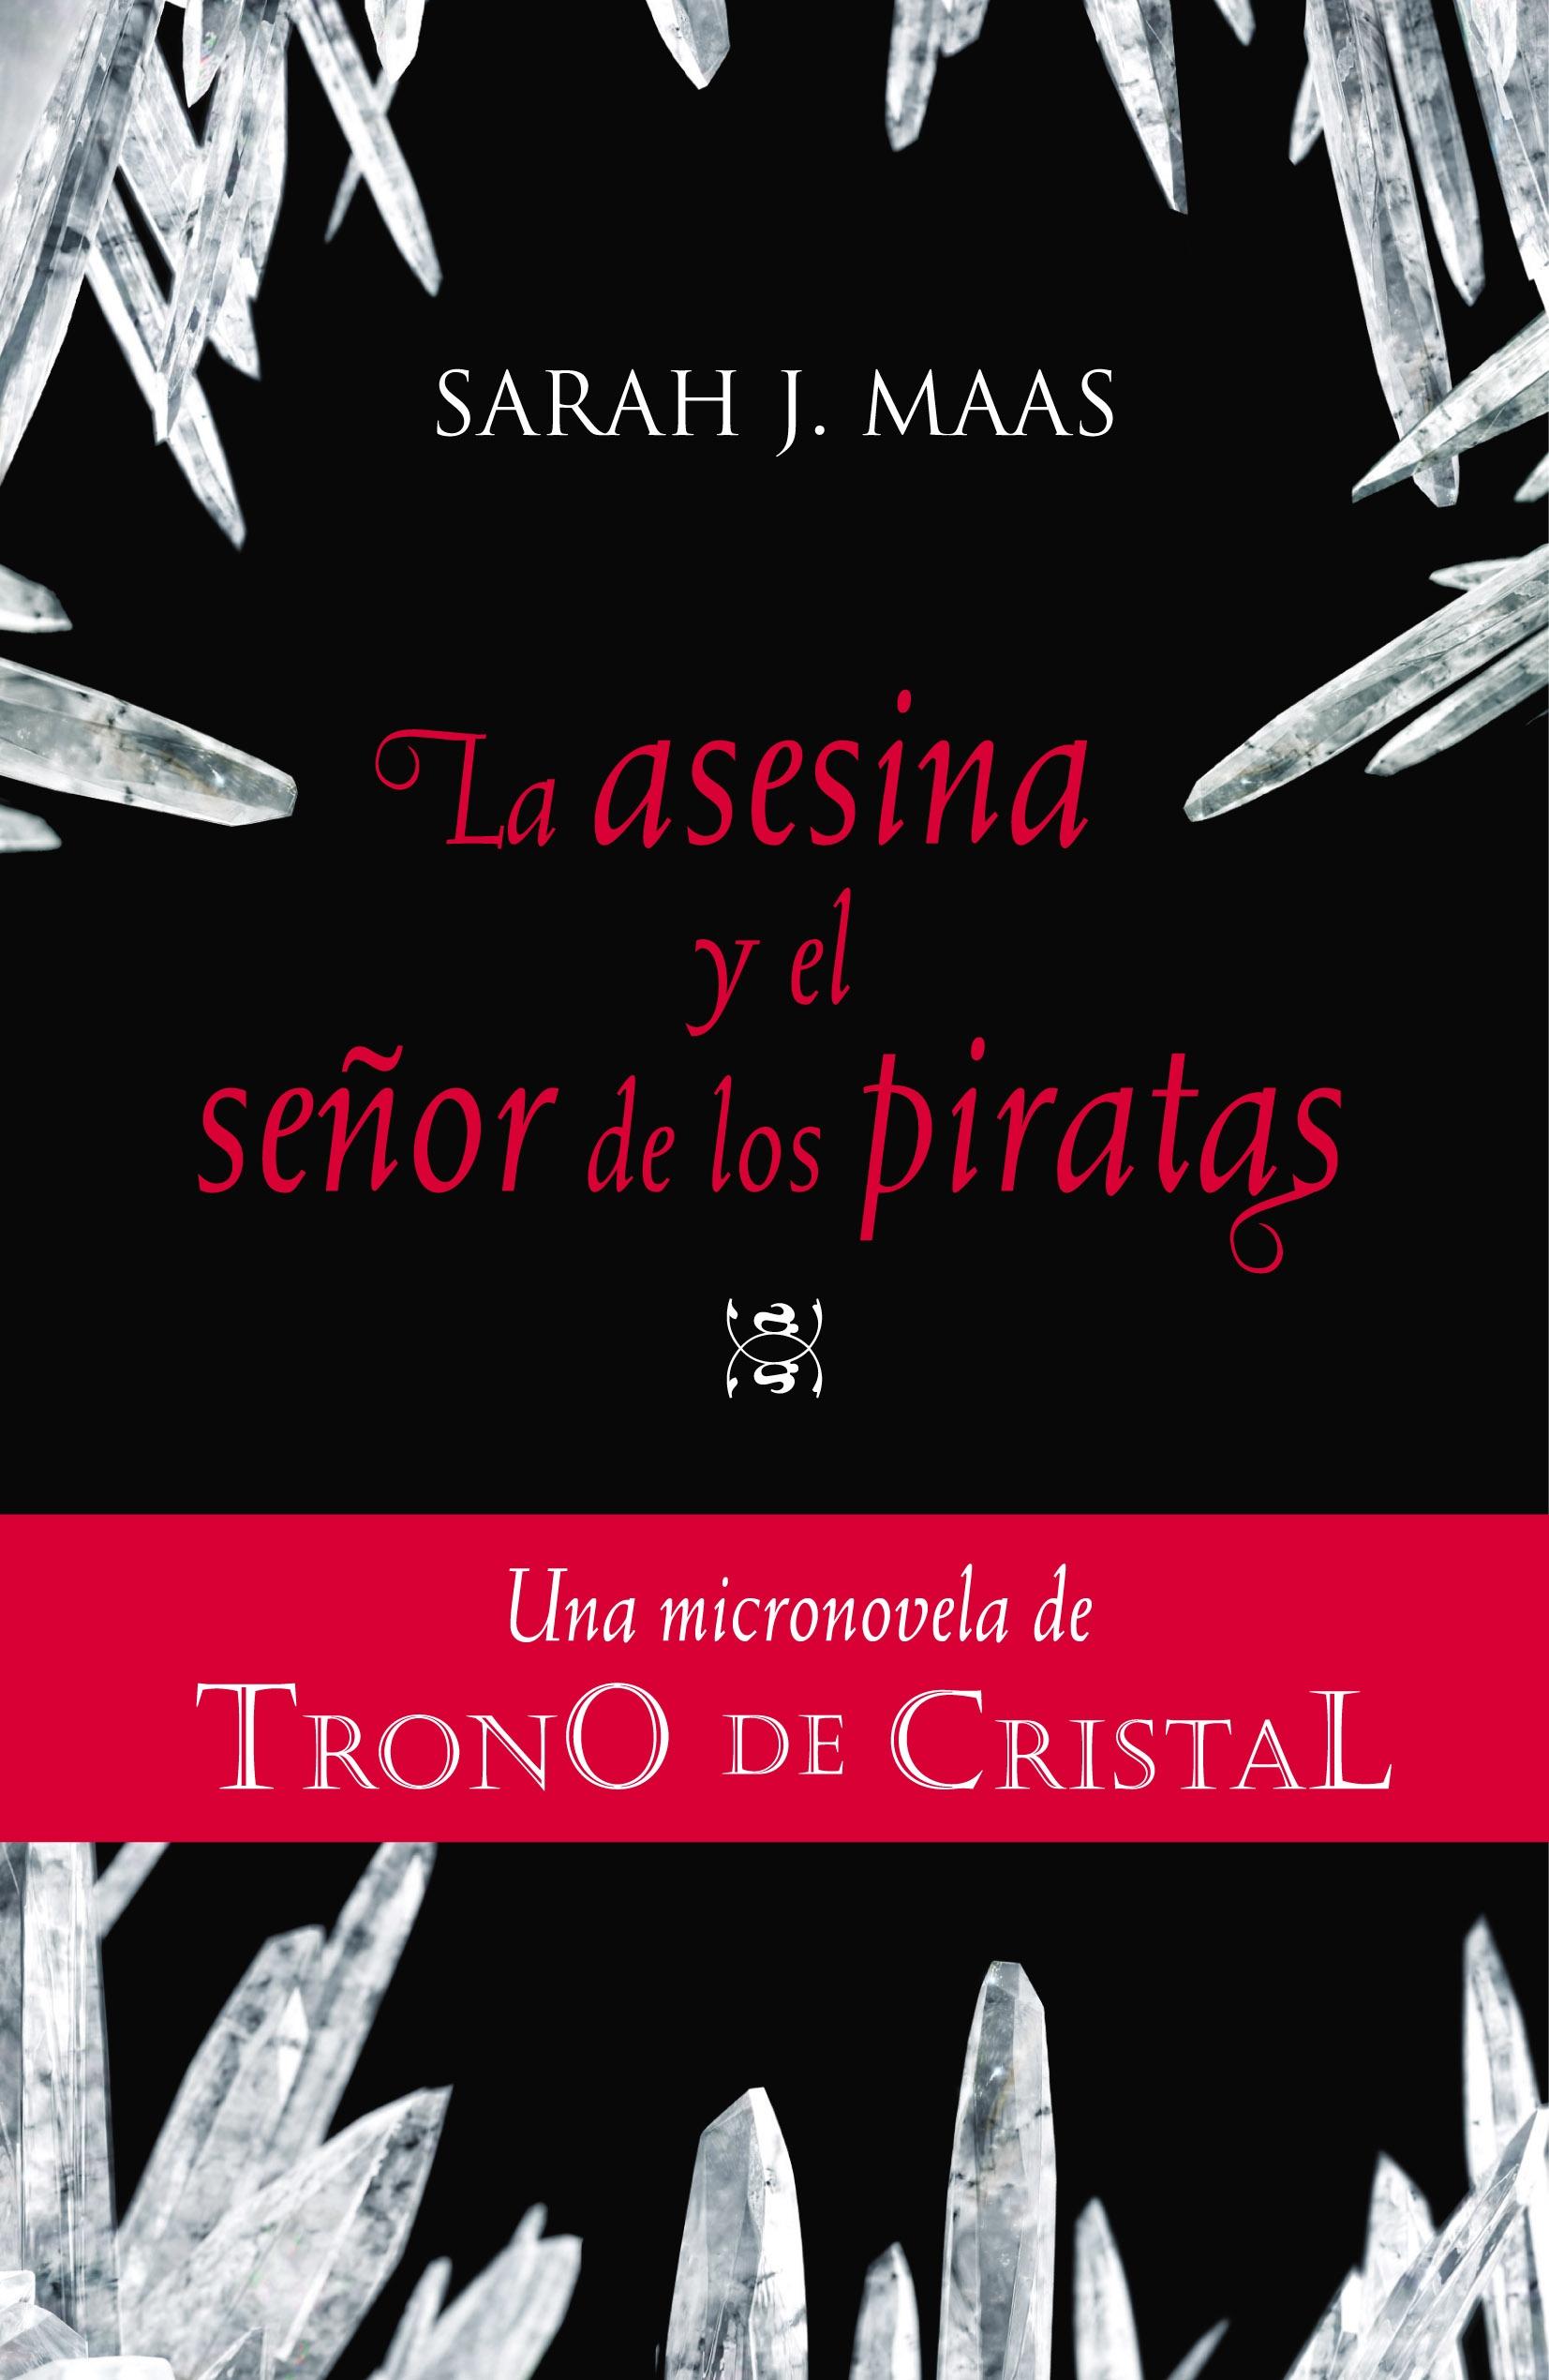 Publicación e-novellas de Trono de Cristal, también en español